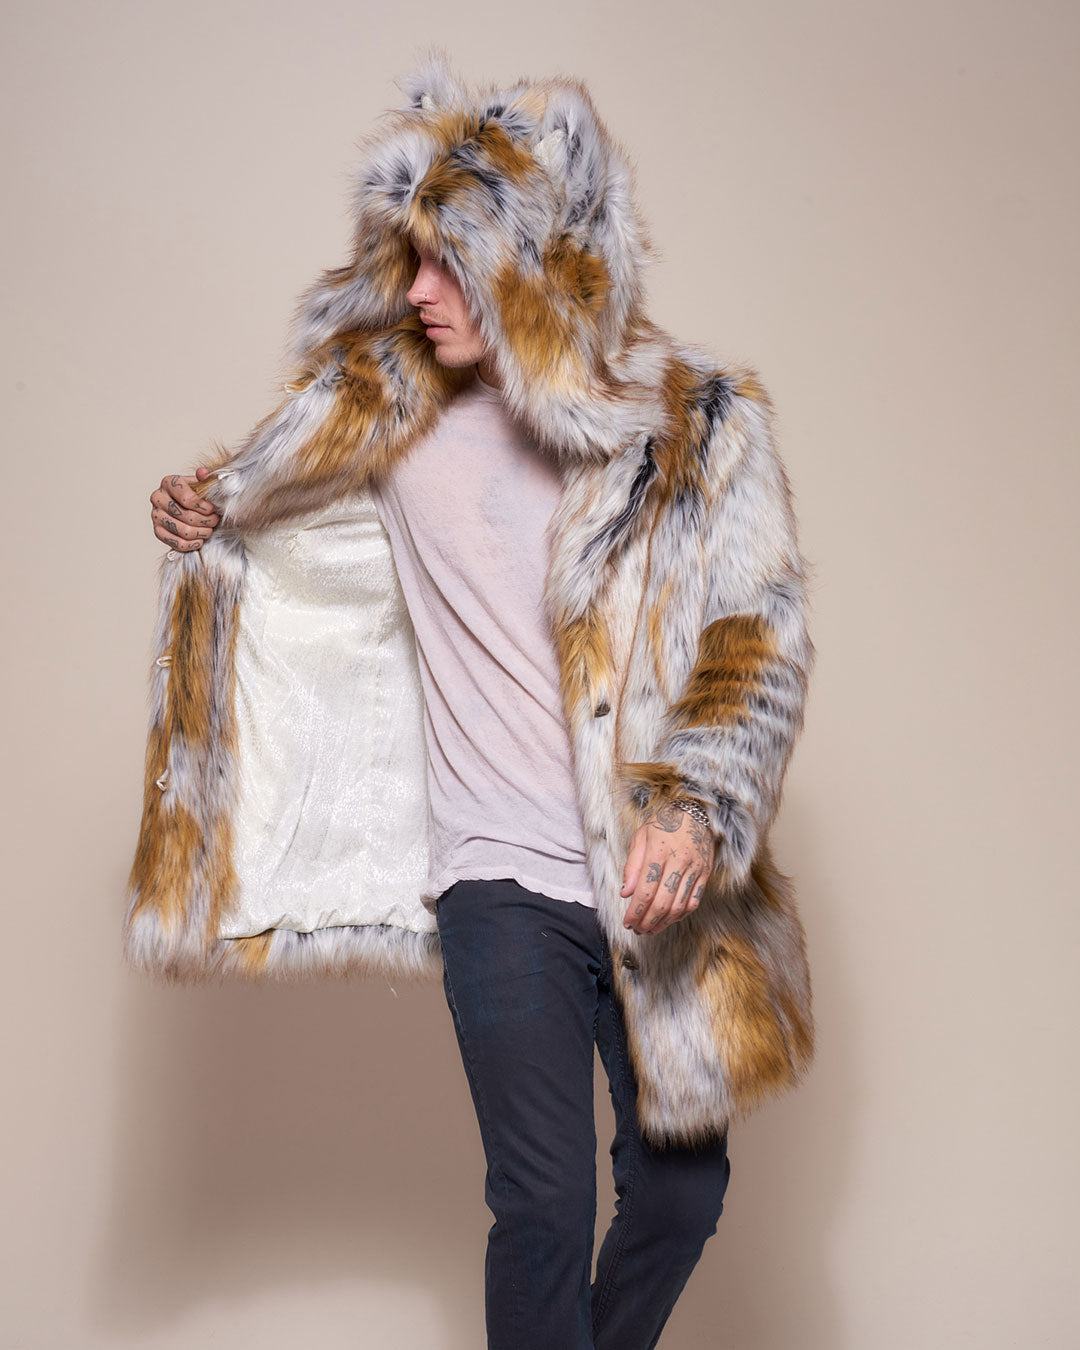 Fluffy White Fox Fur Jacket- 100% Real Fur Coats